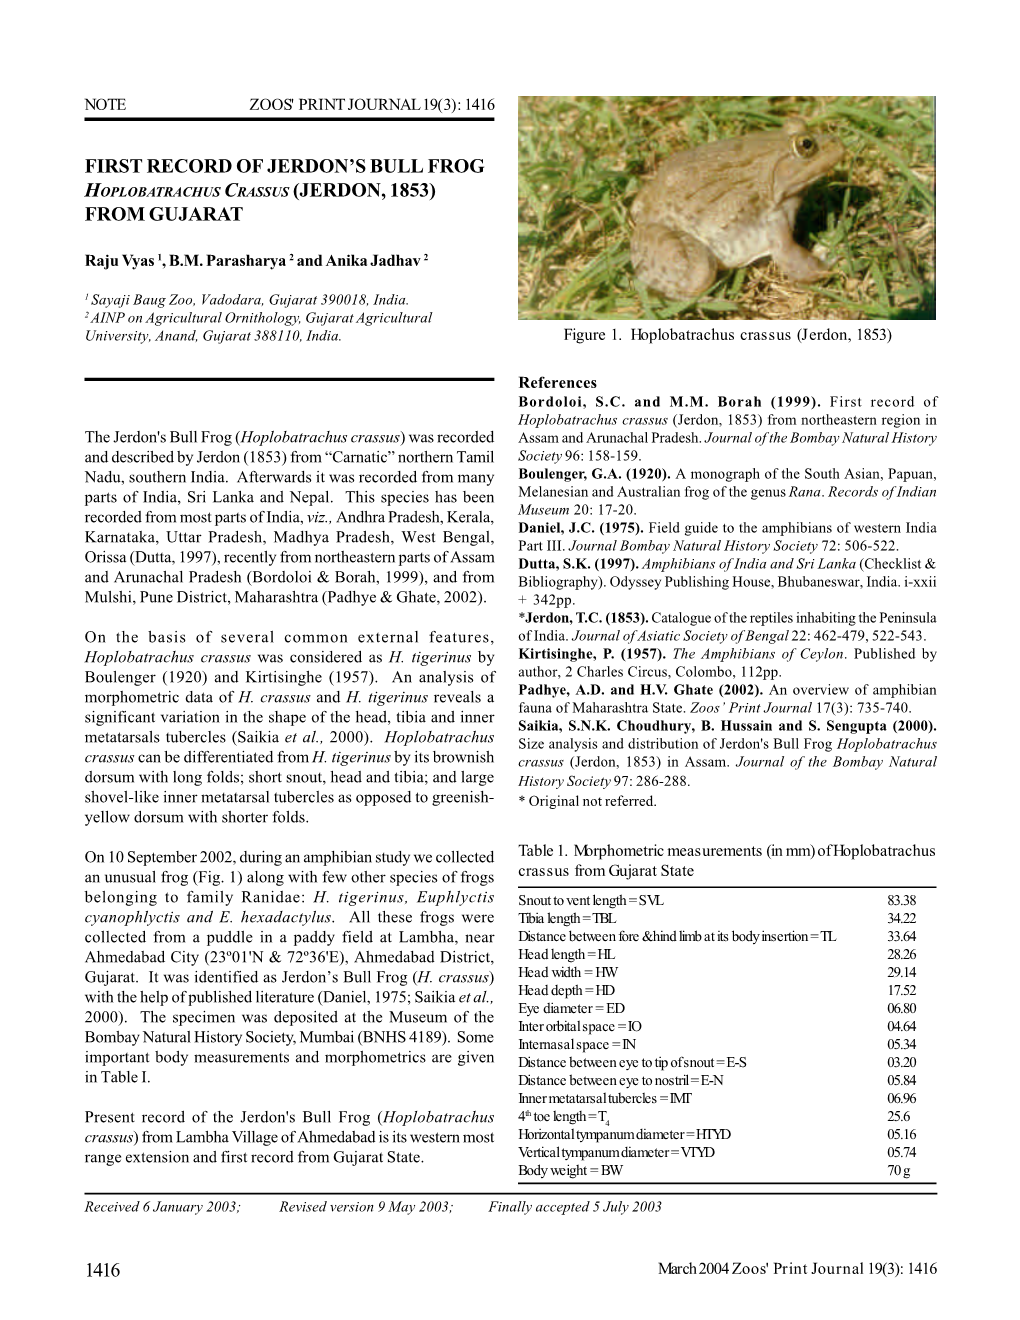 First Record of Jerdon's Bull Frog Hoplobatrachus Crassus